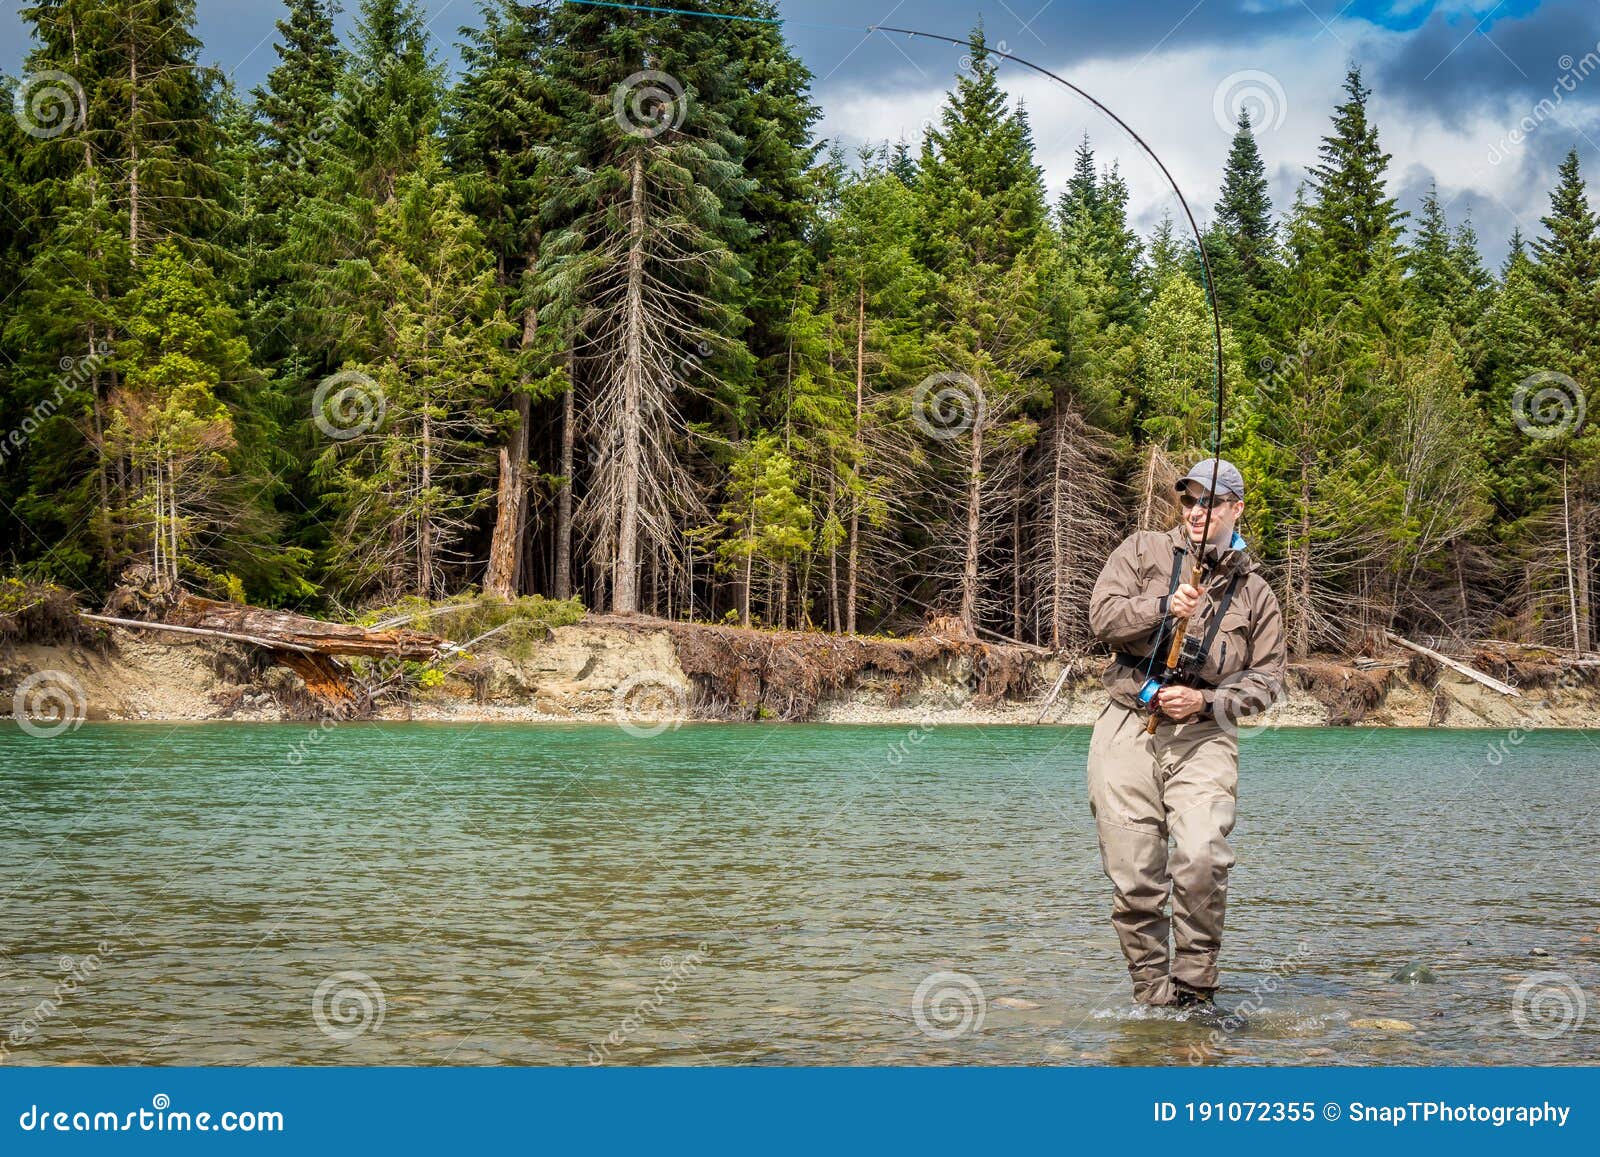 141 Rod Fishing British Columbia Stock Photos - Free & Royalty